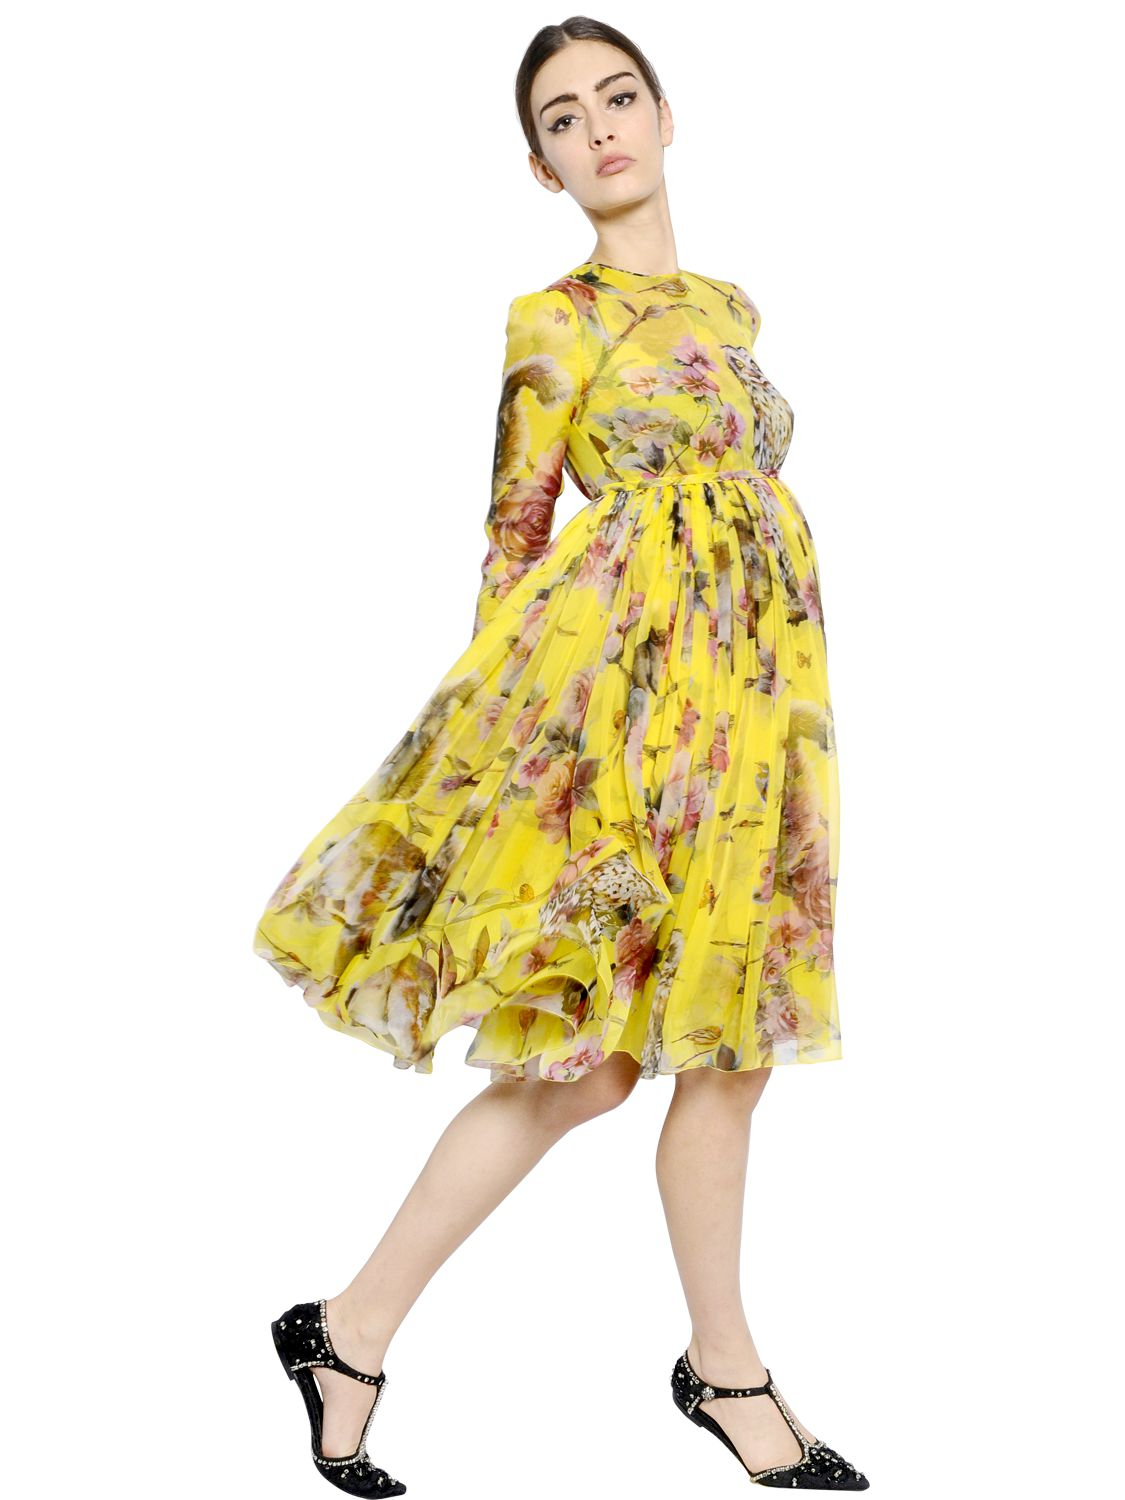 Lyst - Dolce & Gabbana Floral Printed Silk Chiffon Dress in Yellow